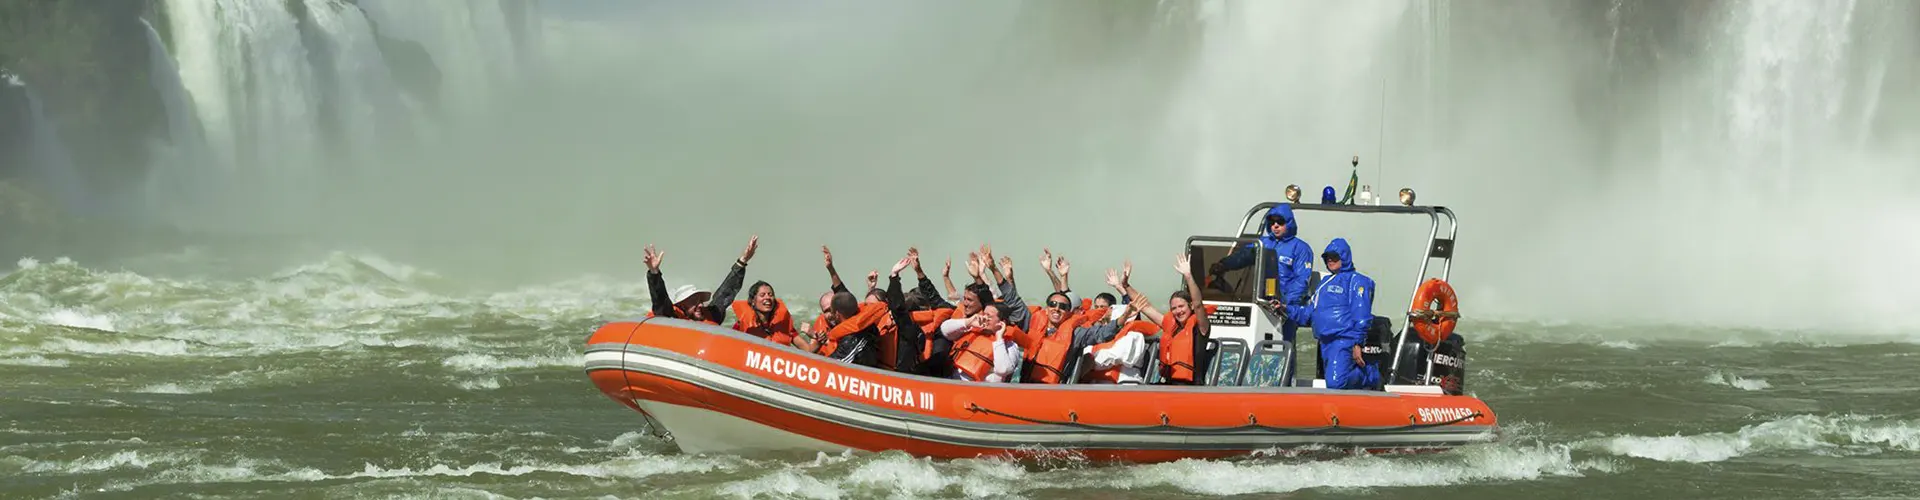 Ingresso Macuco Safari - Passeio de barco nas Cataratas